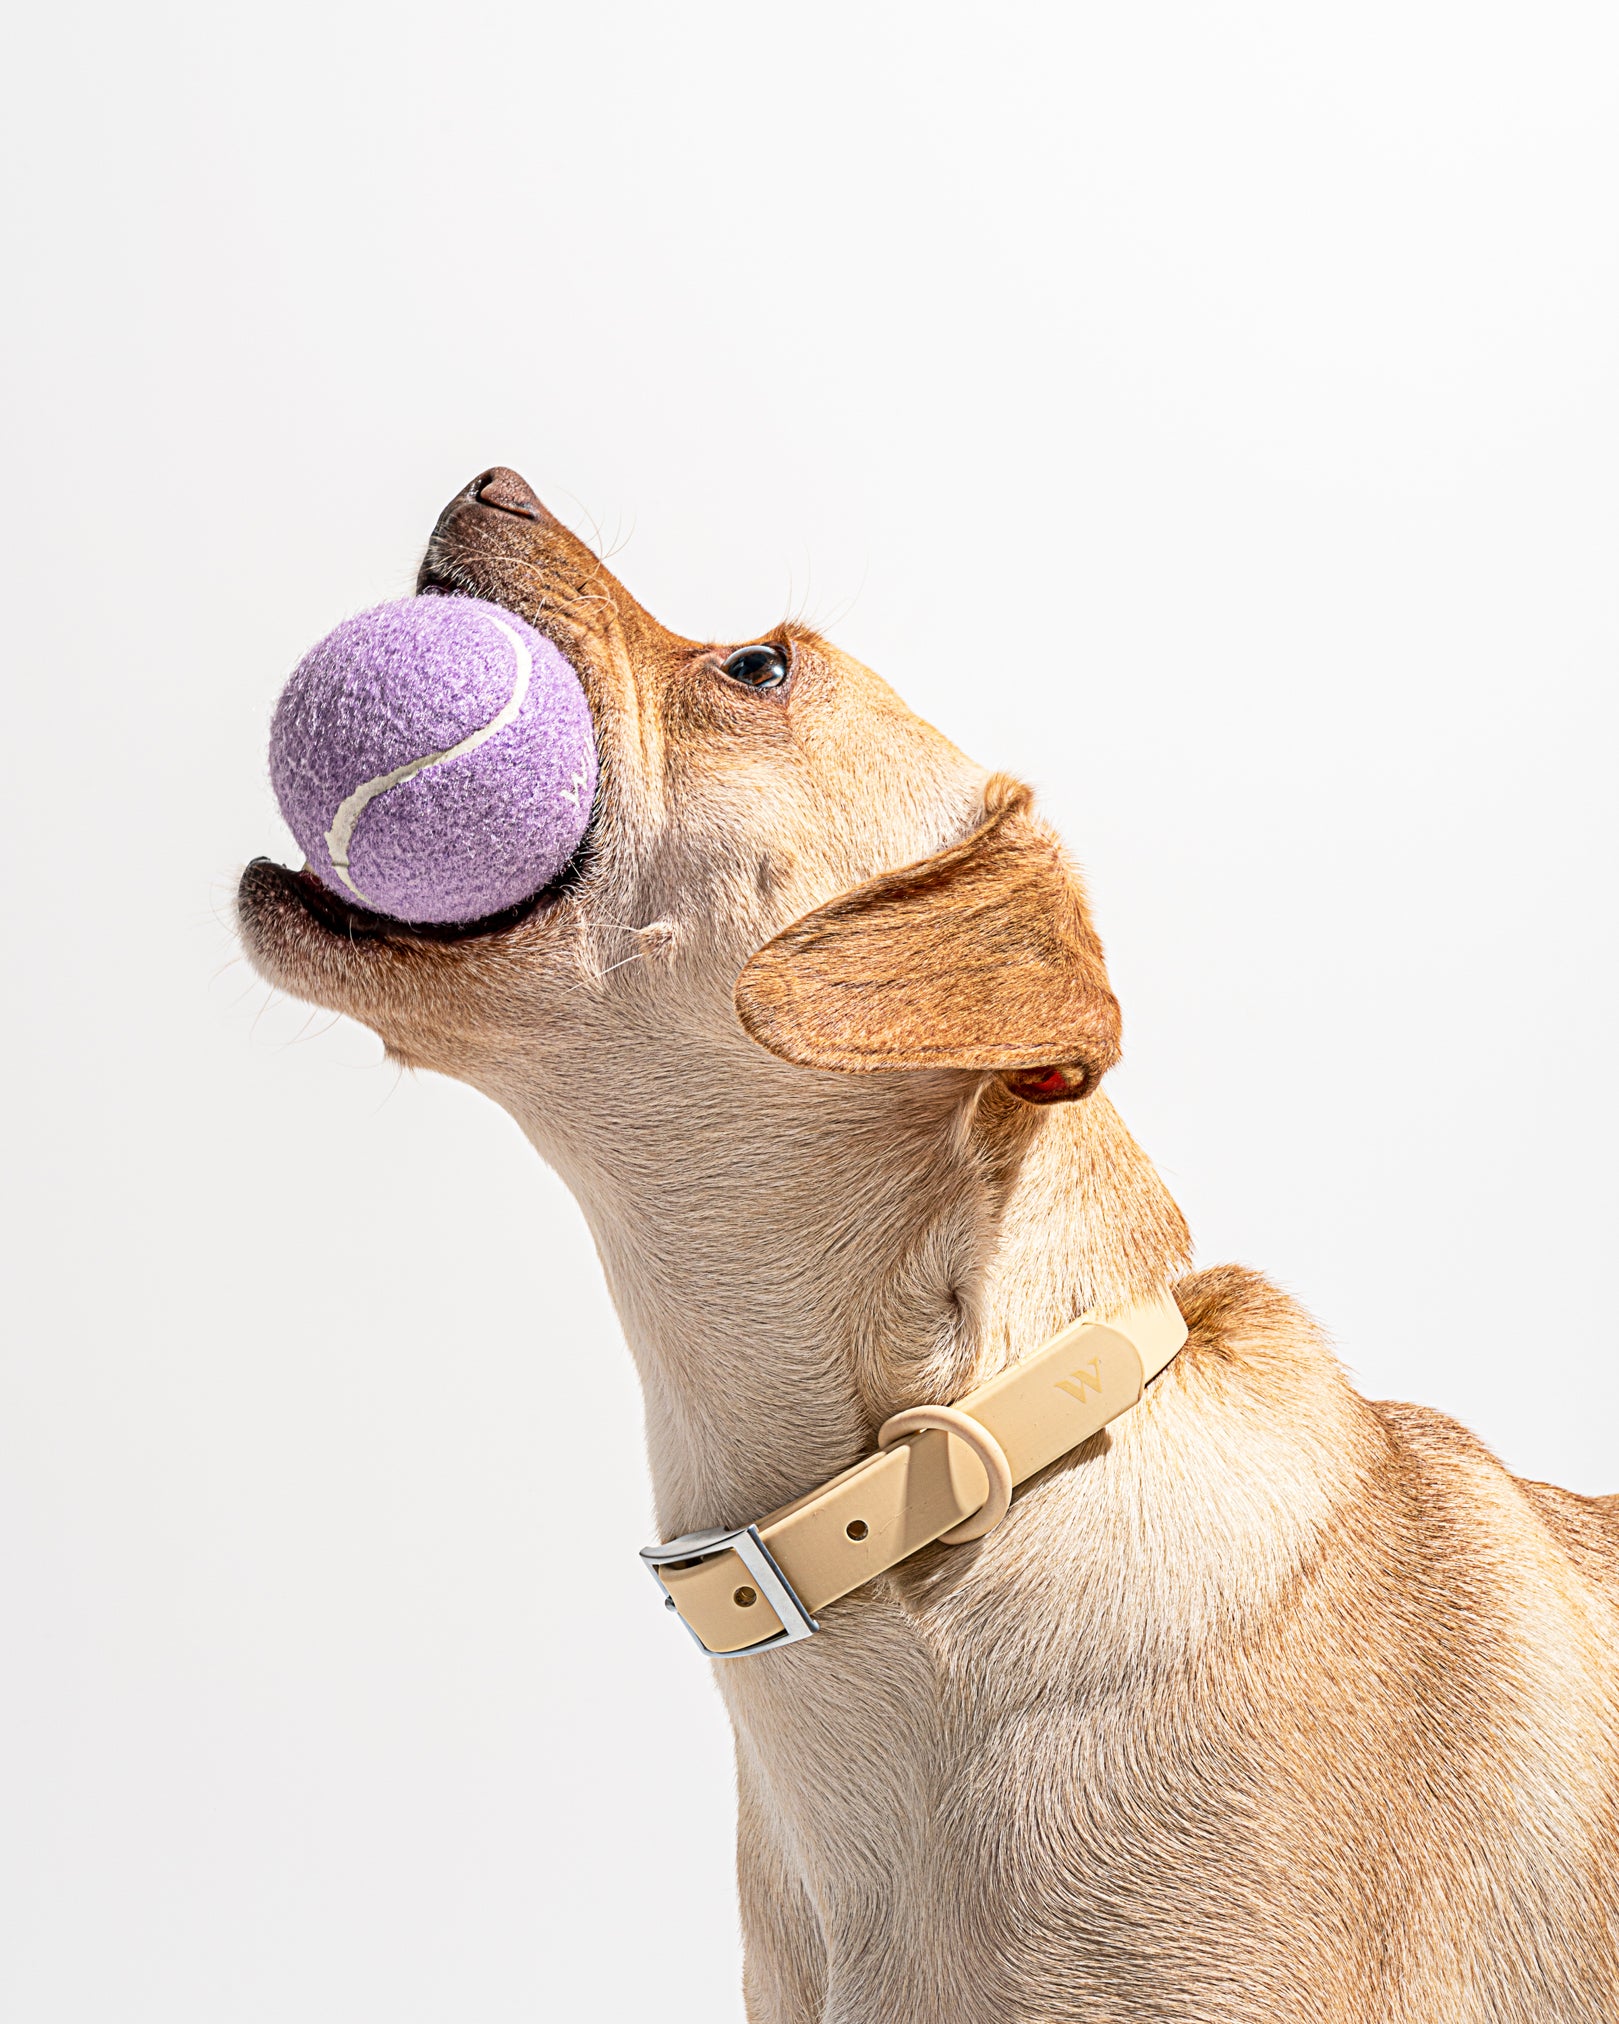 Tennis balls in lilac